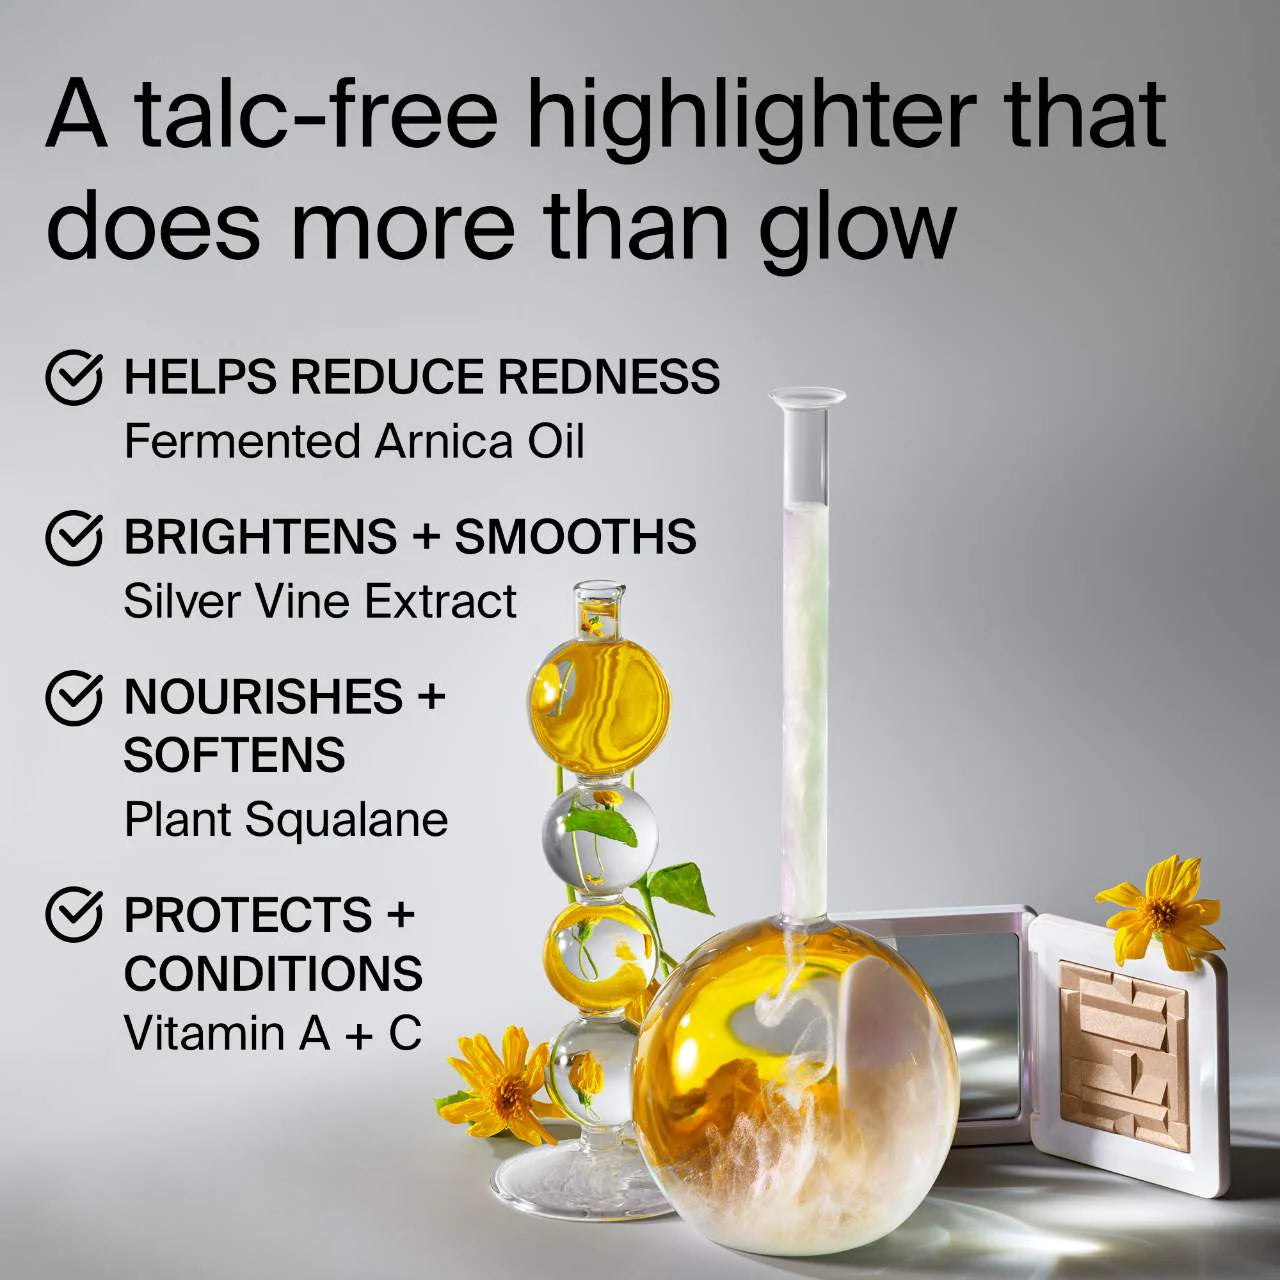 Bio-Radiant Gel-Powder Highlighter with Fermented Arnica